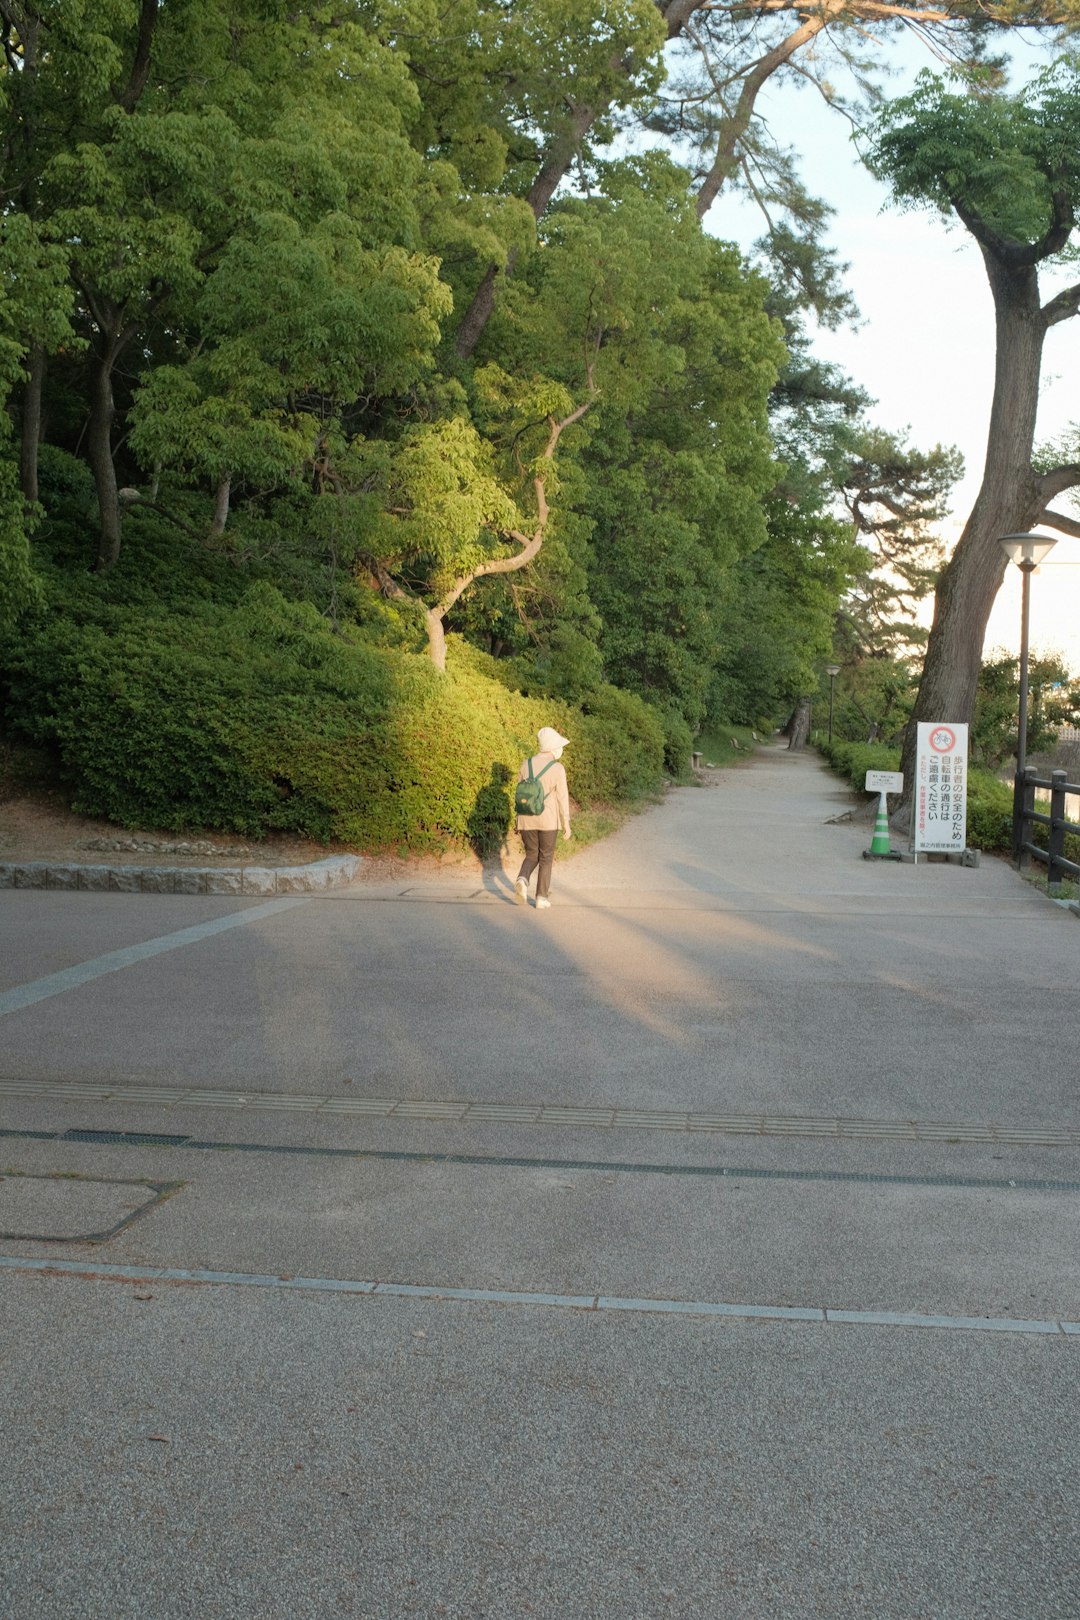 man in green shirt and brown shorts walking on gray asphalt road during daytime